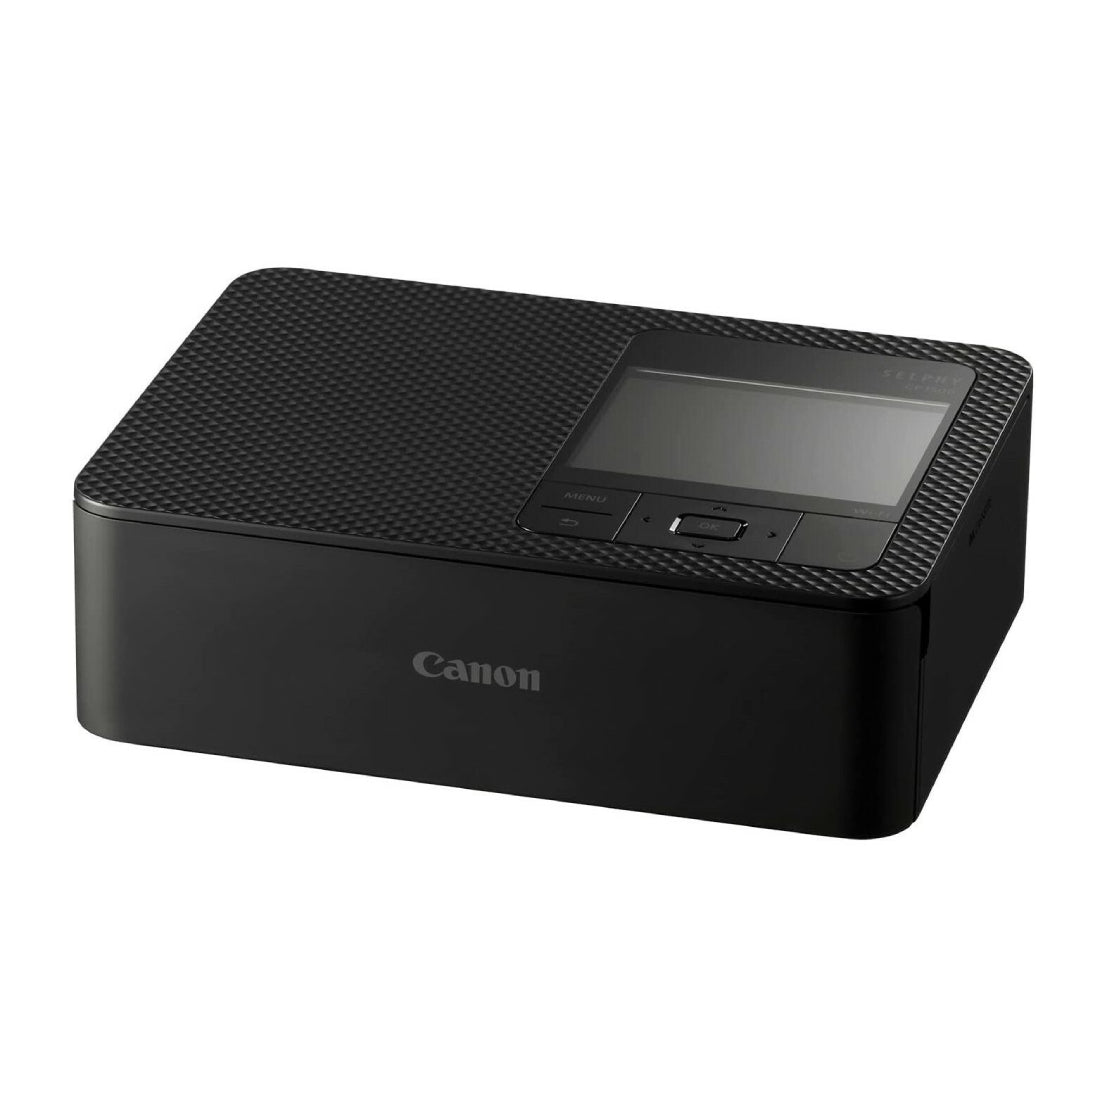 Canon SELPHY CP1500 Printer - Black - طابعة - Store 974 | ستور ٩٧٤